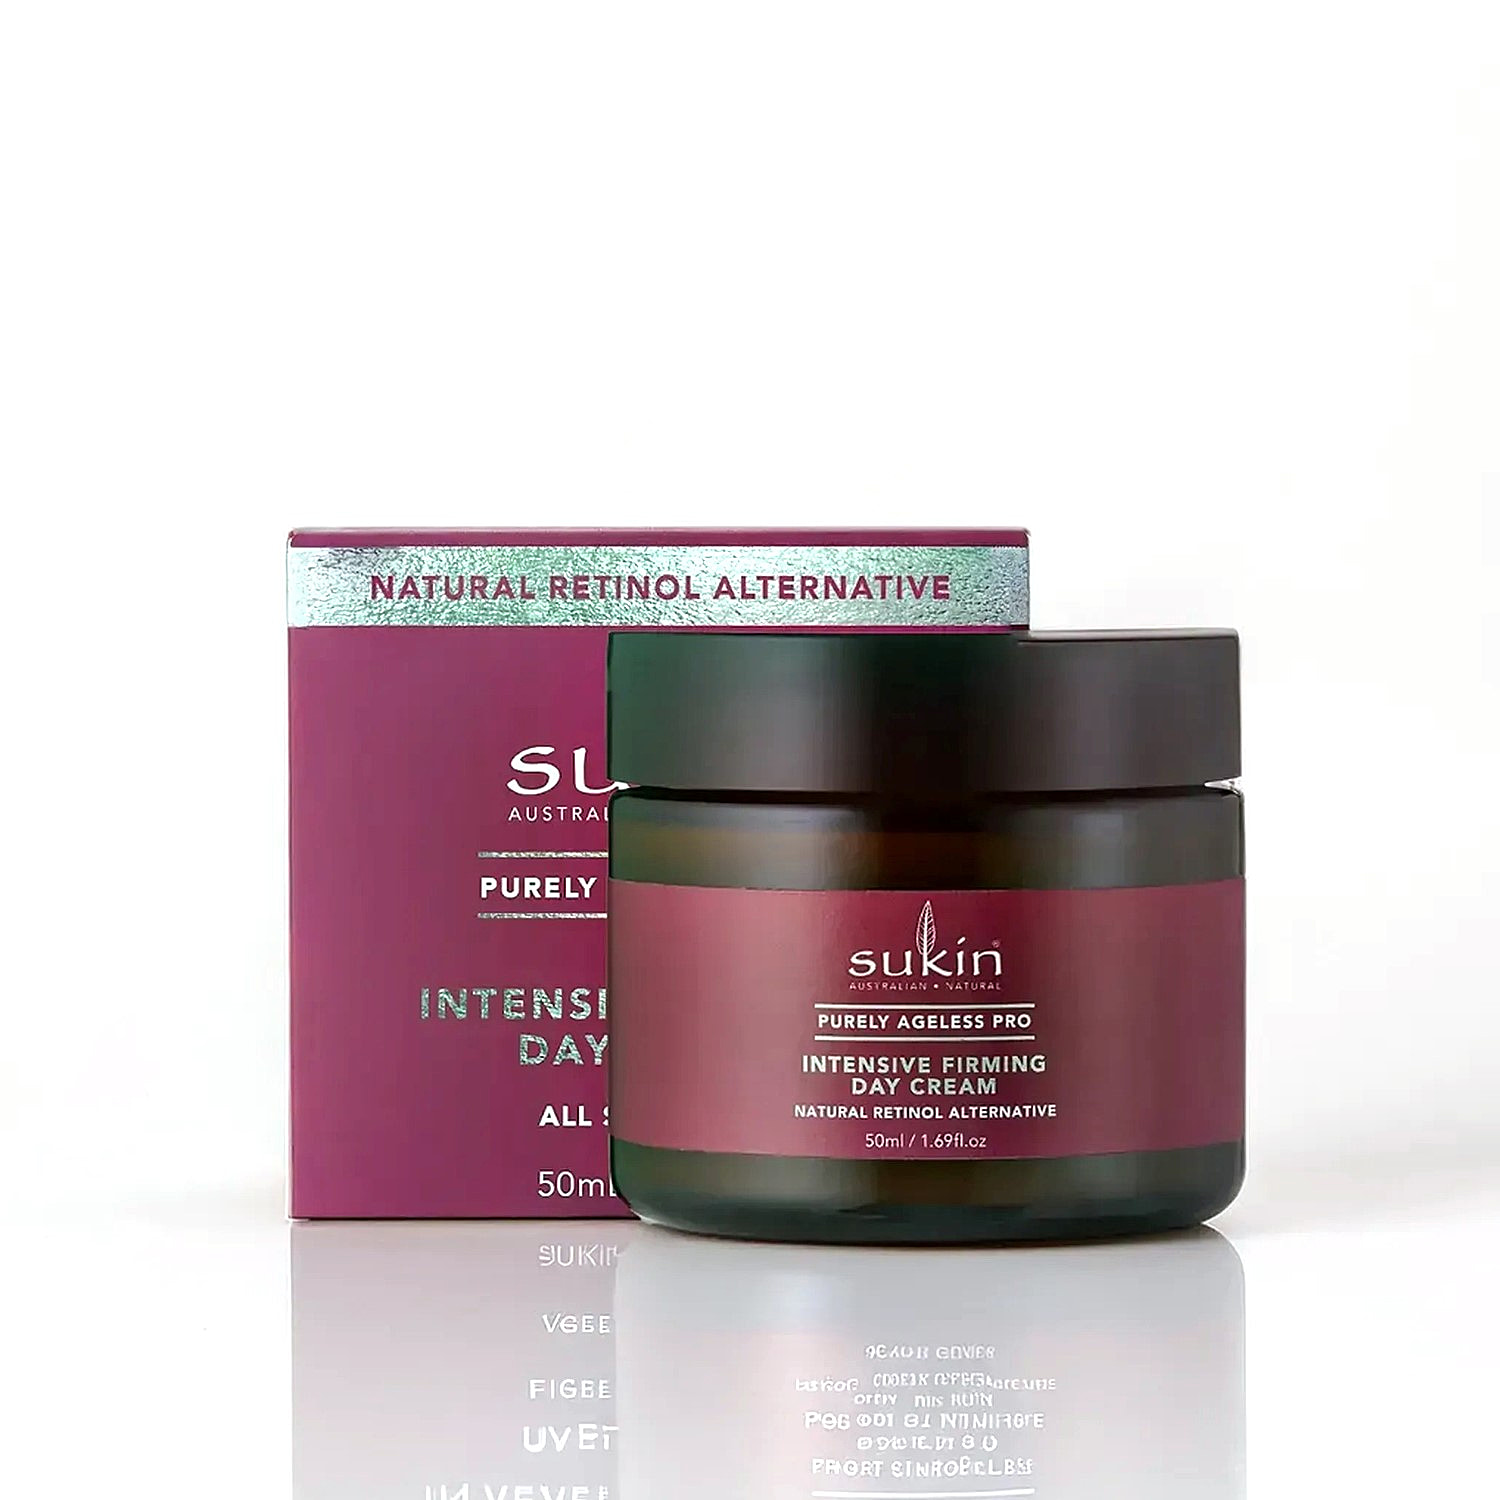 Sukin- Purely Ageless PRO Intensive Firming Day Cream 50ml Jar